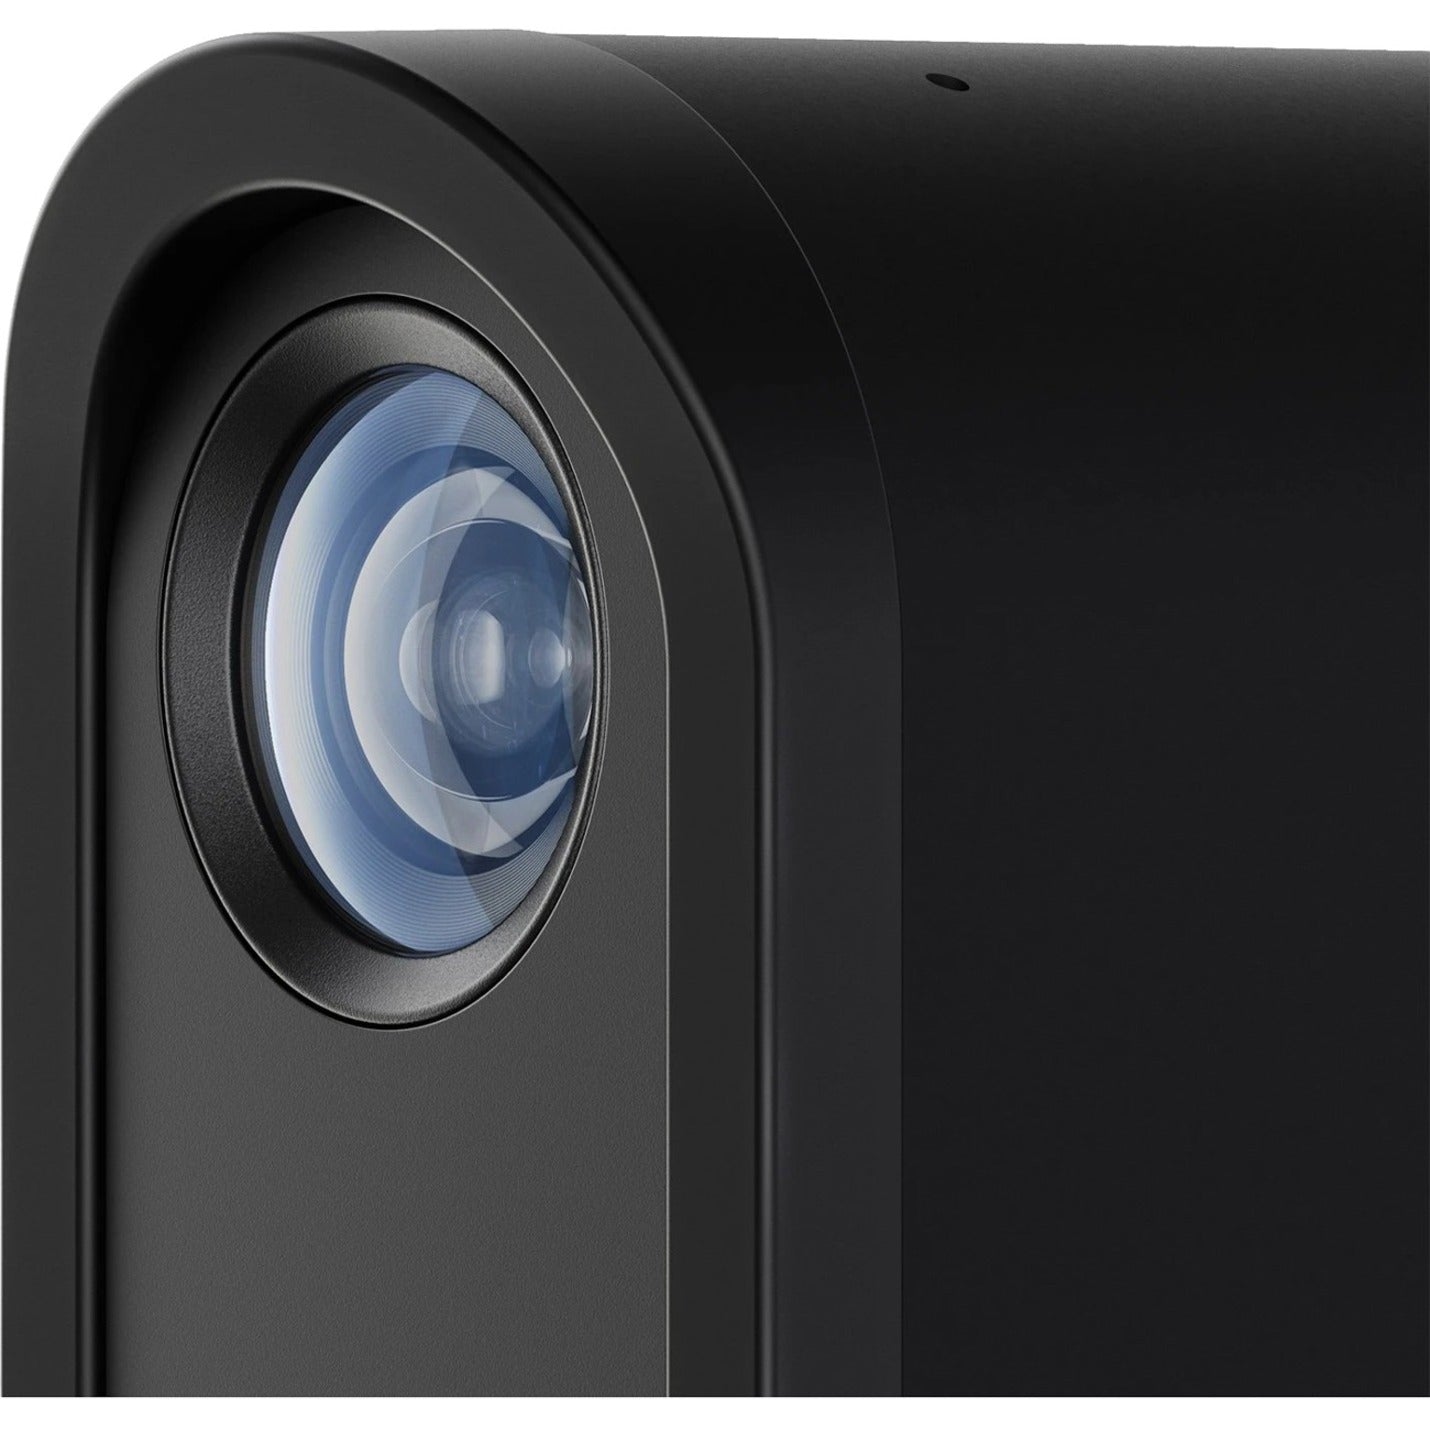 Mevo 961-000500 Start Camera, 3 Pack - Full HD Video Conferencing Camera